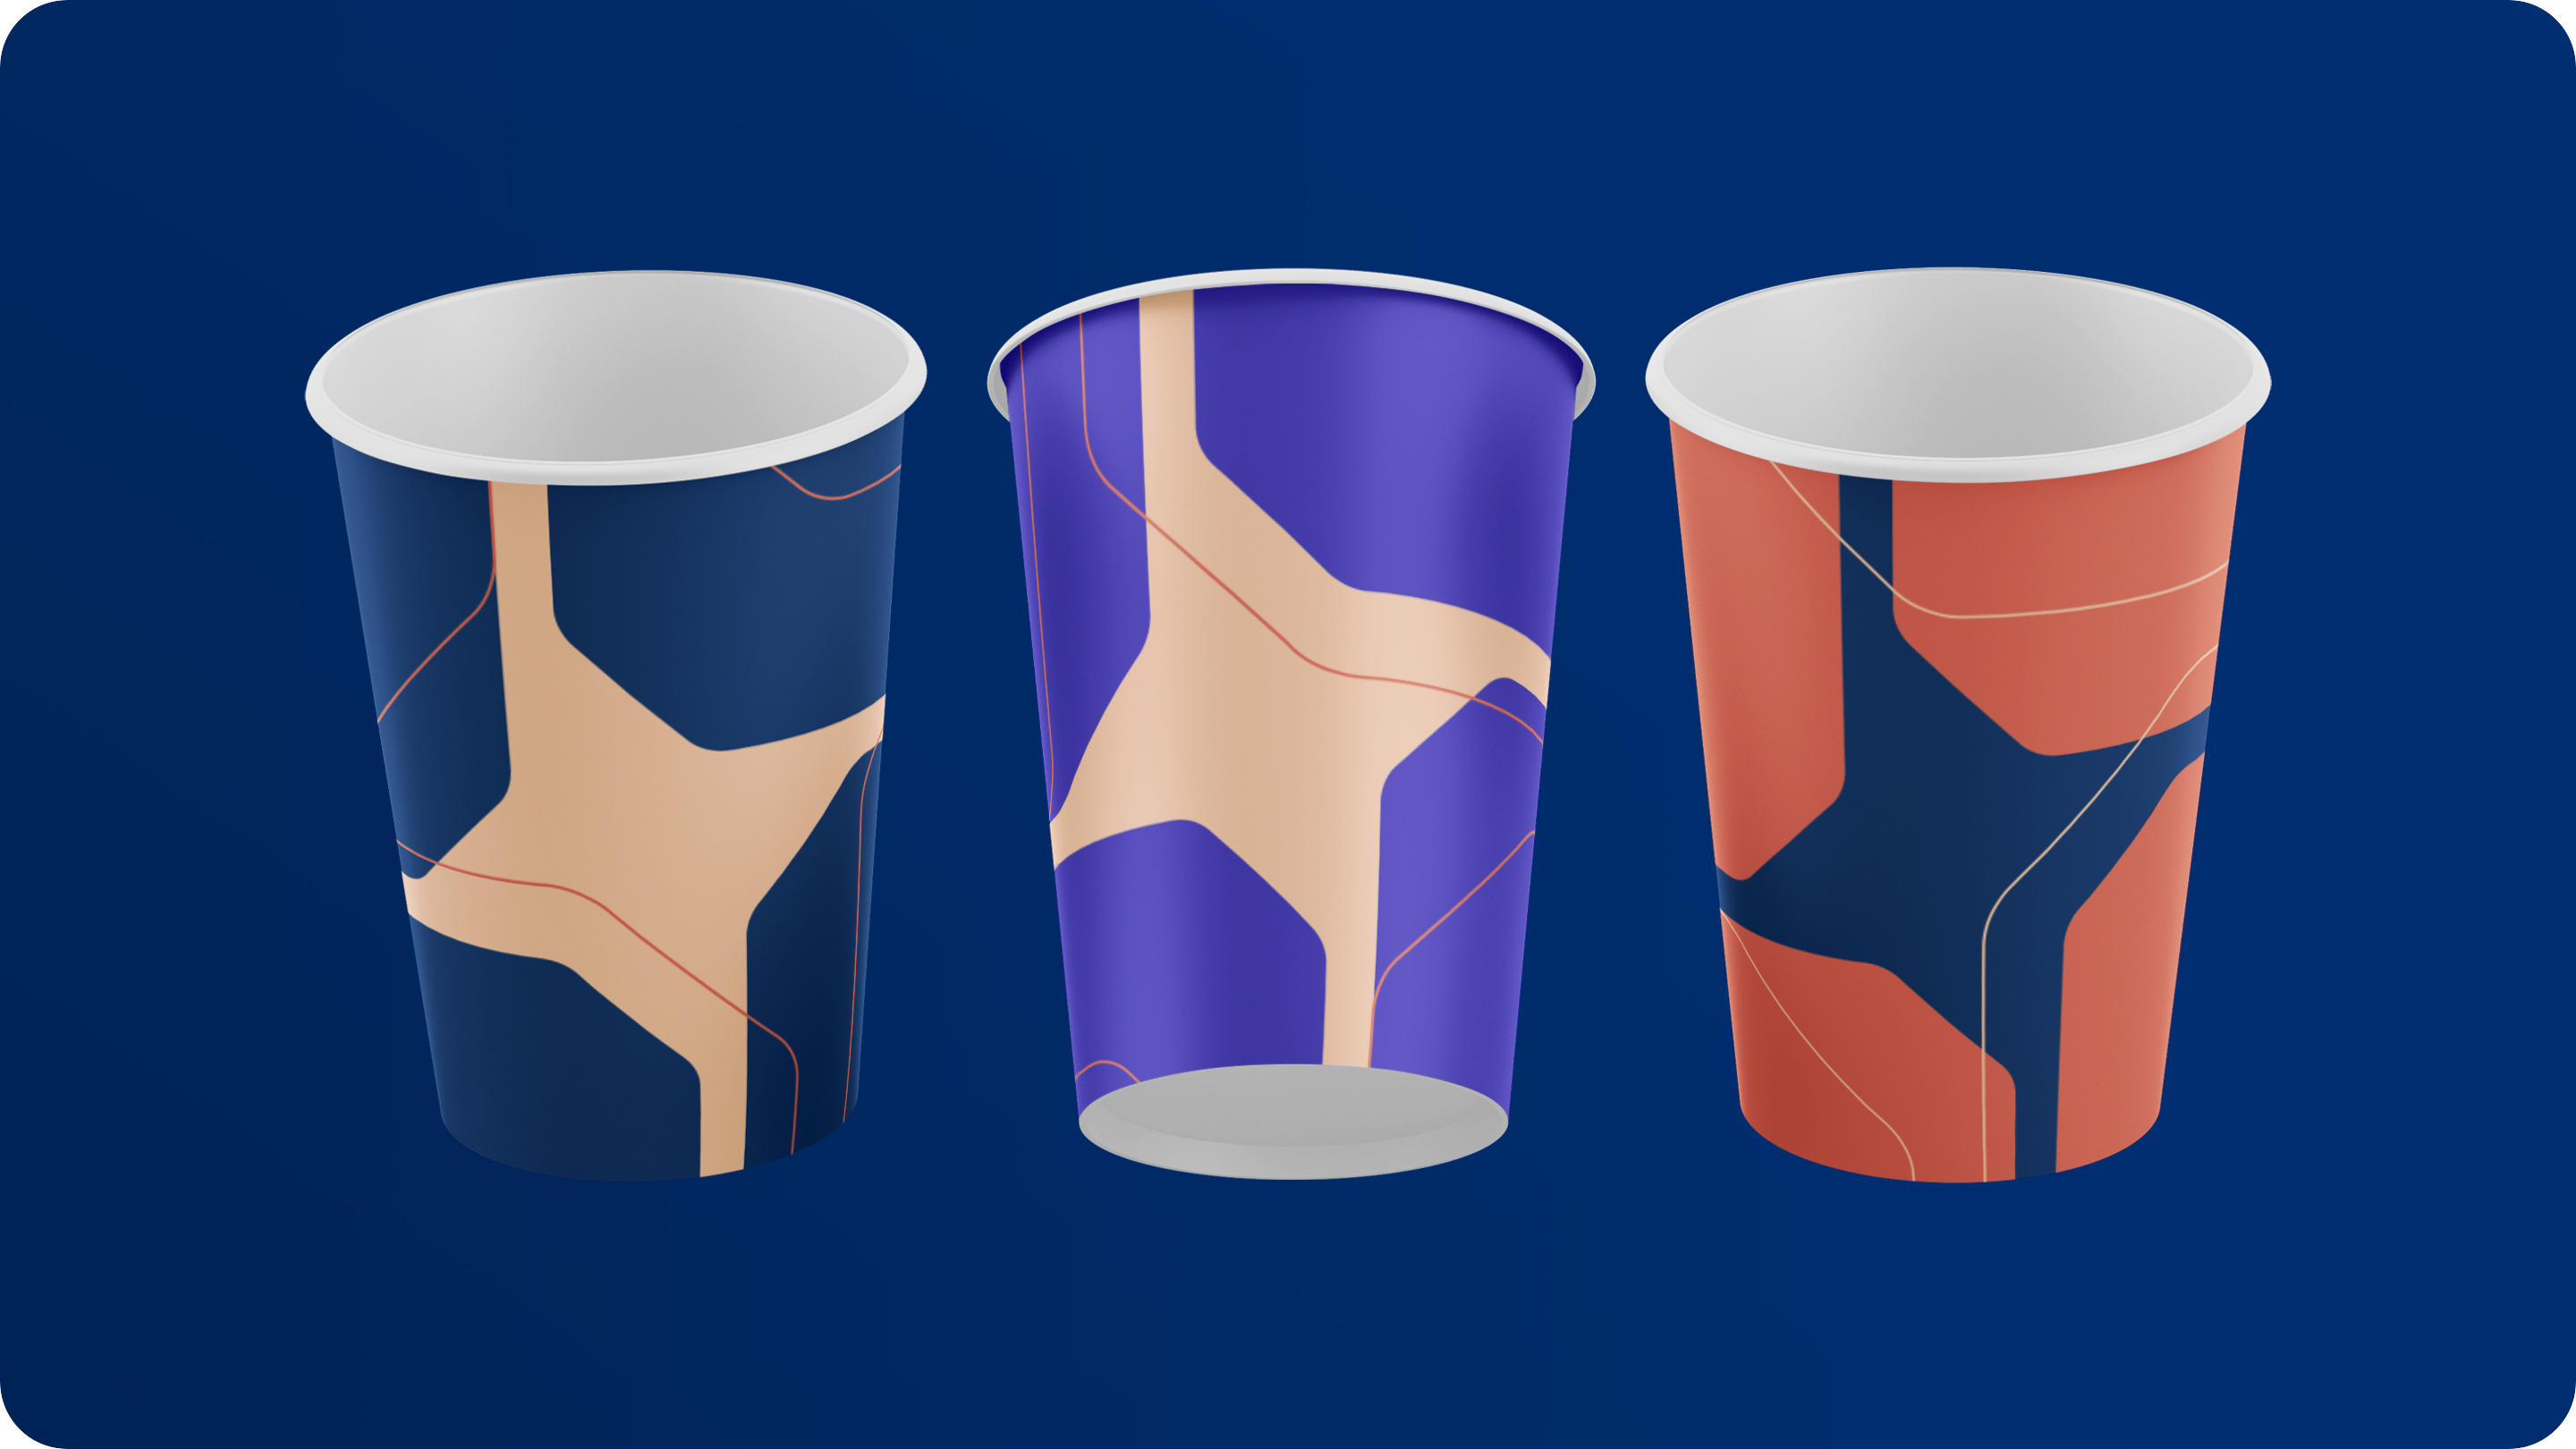 Flatfile brand application on cups